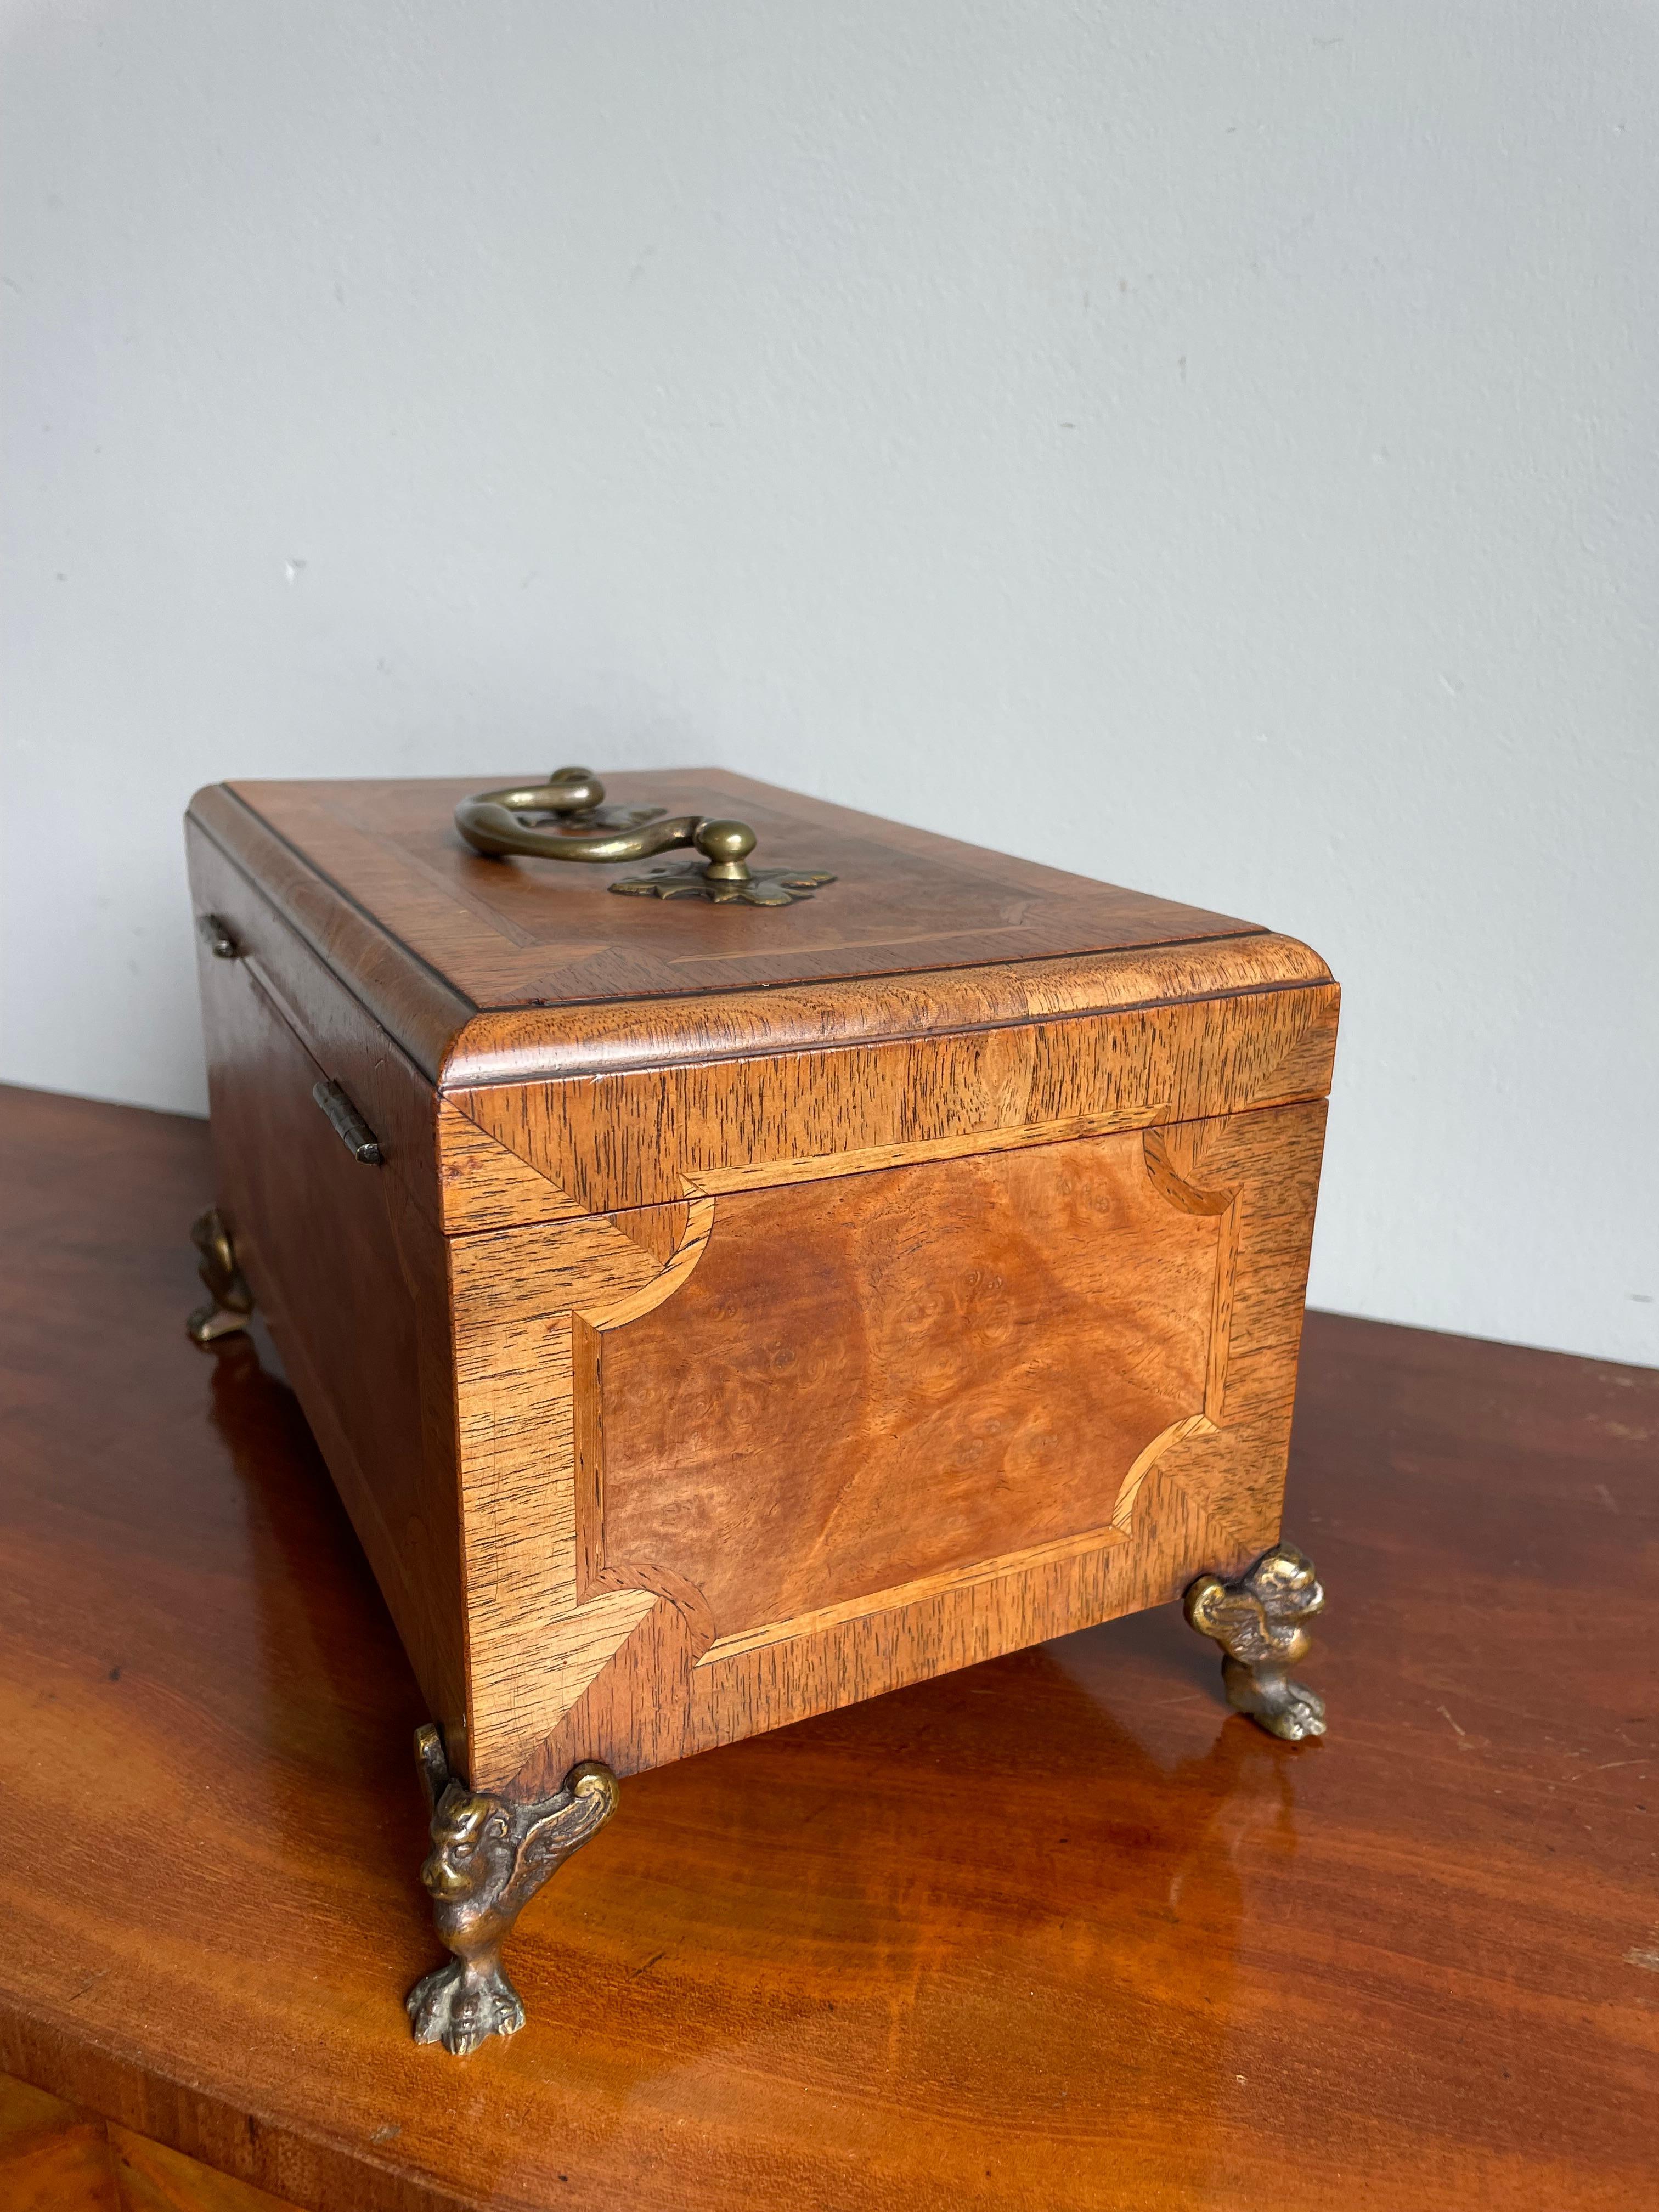 Stunning Late 1800s Walnut, Burl Walnut & Bronze Jewelry Box with a Great Patina 4